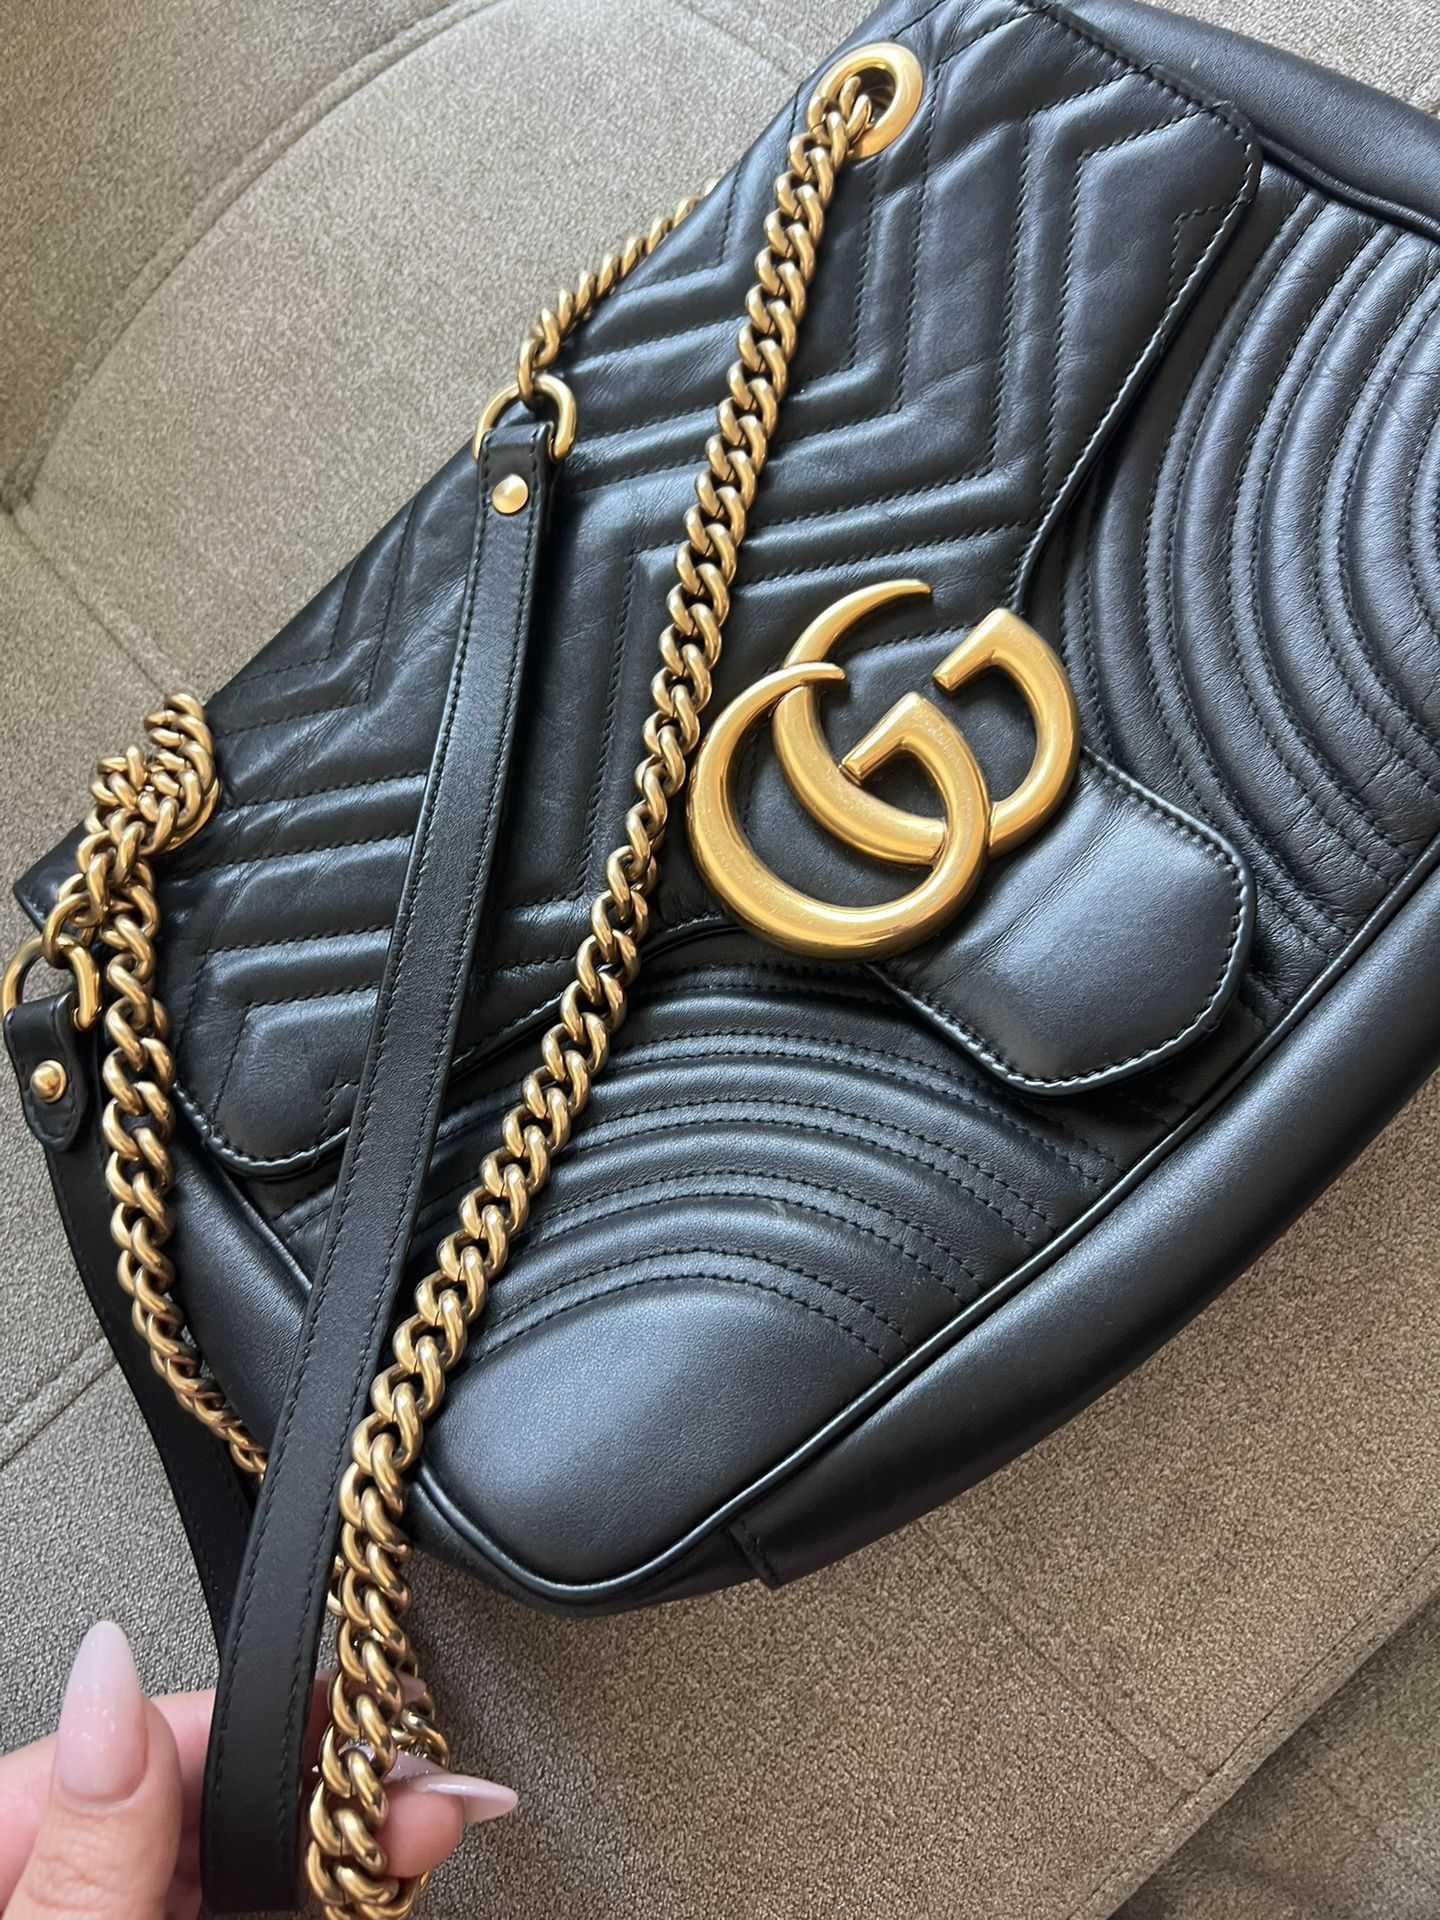 Authentic Gucci - GG MARMONT MEDIUM SHOULDER BAG